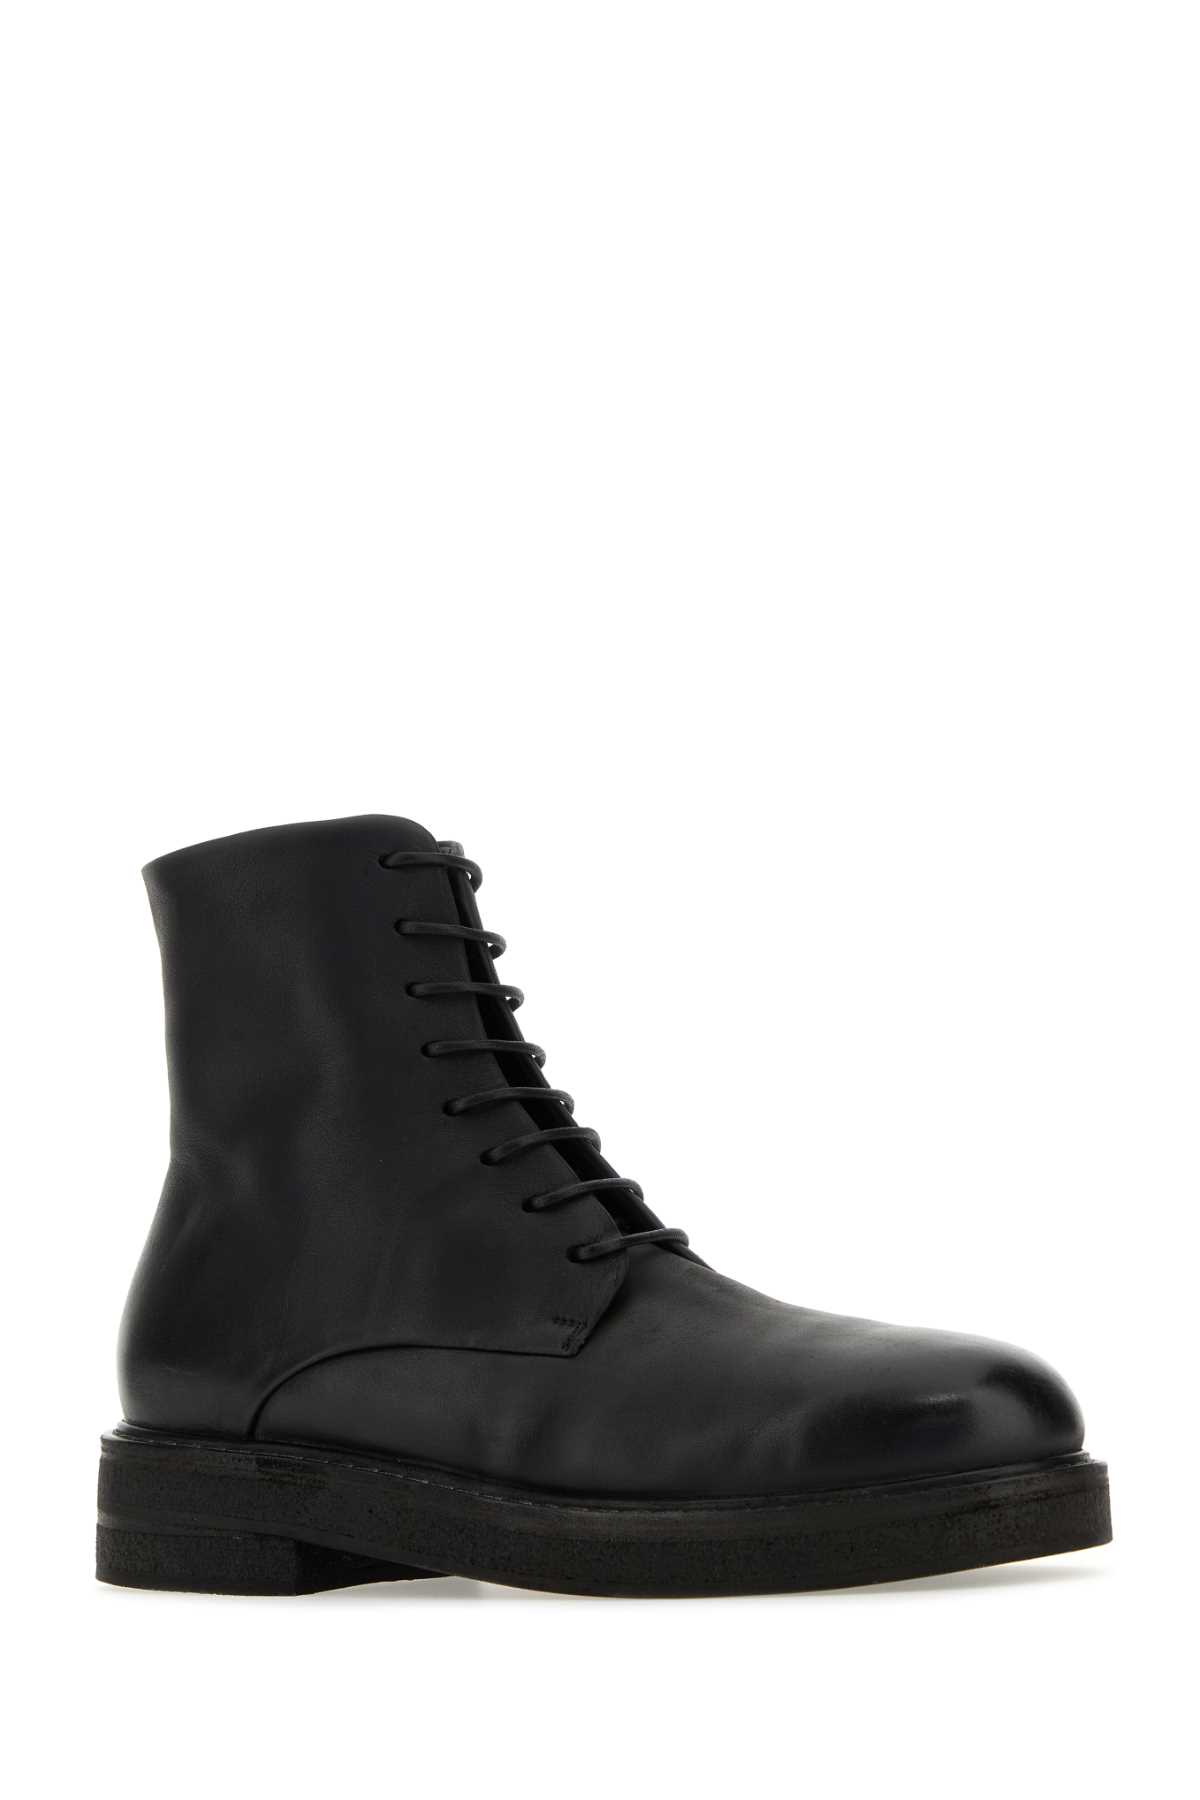 Shop Marsèll Black Leather Ankle Boots